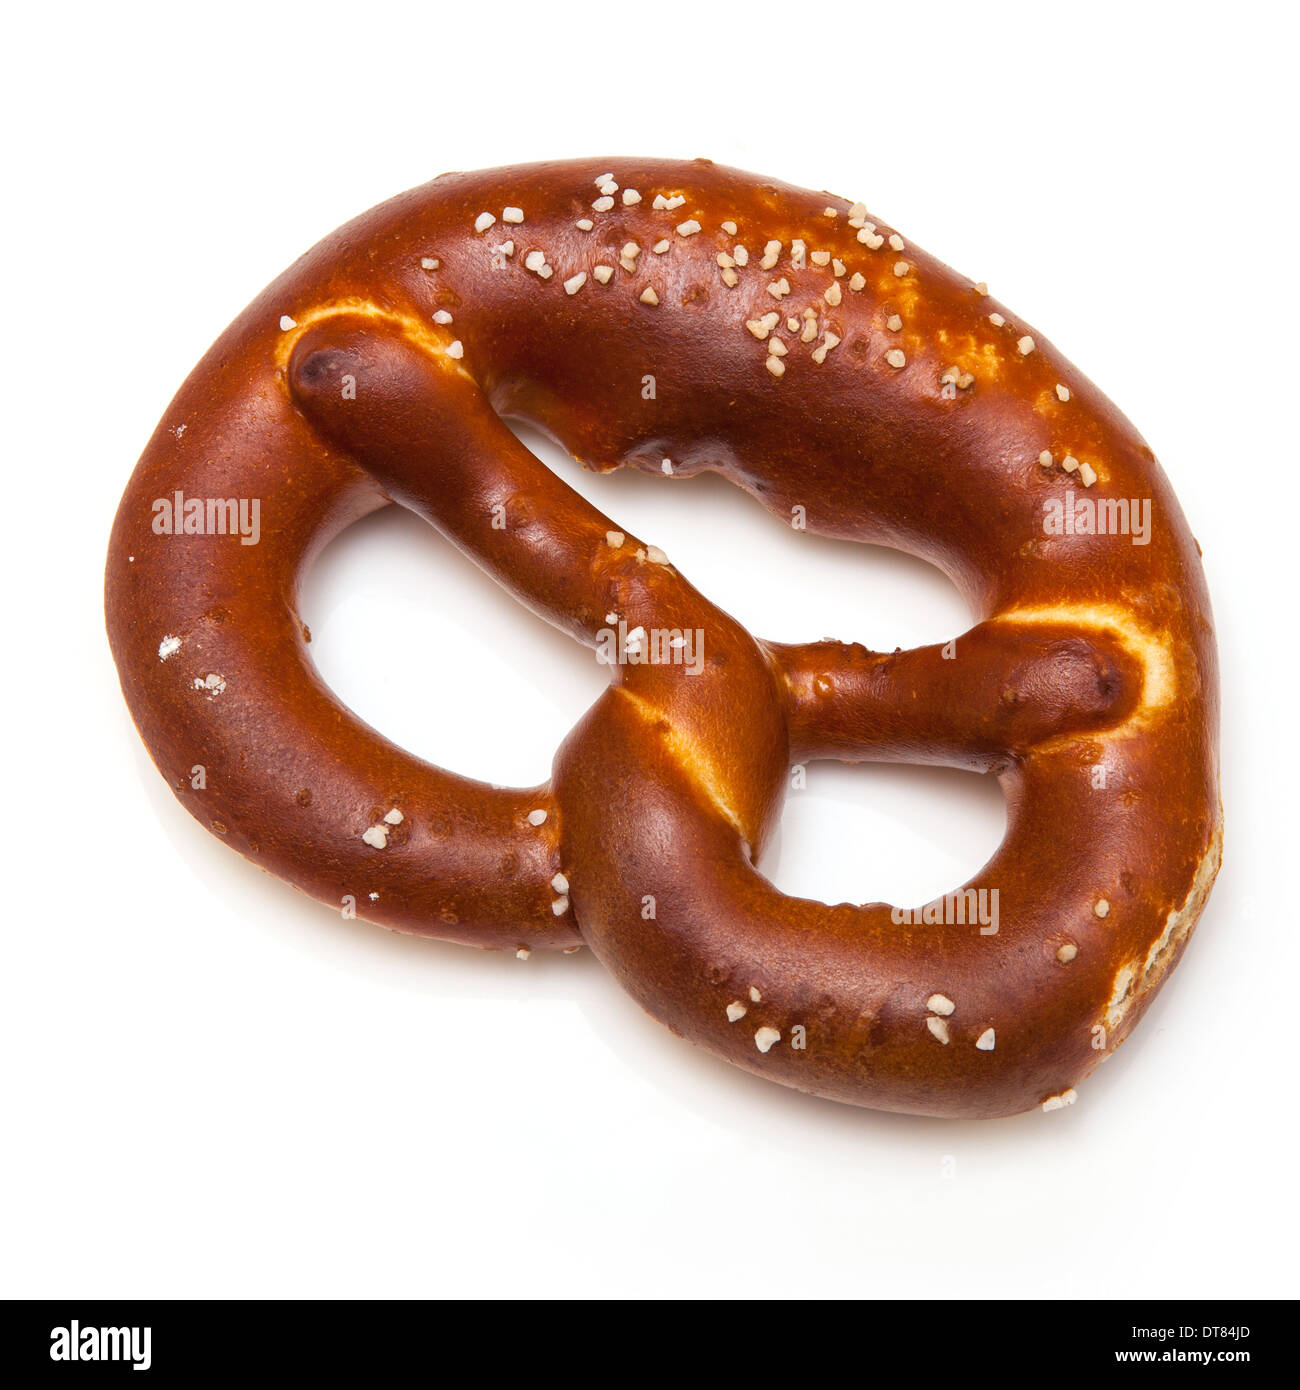 Rock salt pretzel isolated on a white studio background. Stock Photo